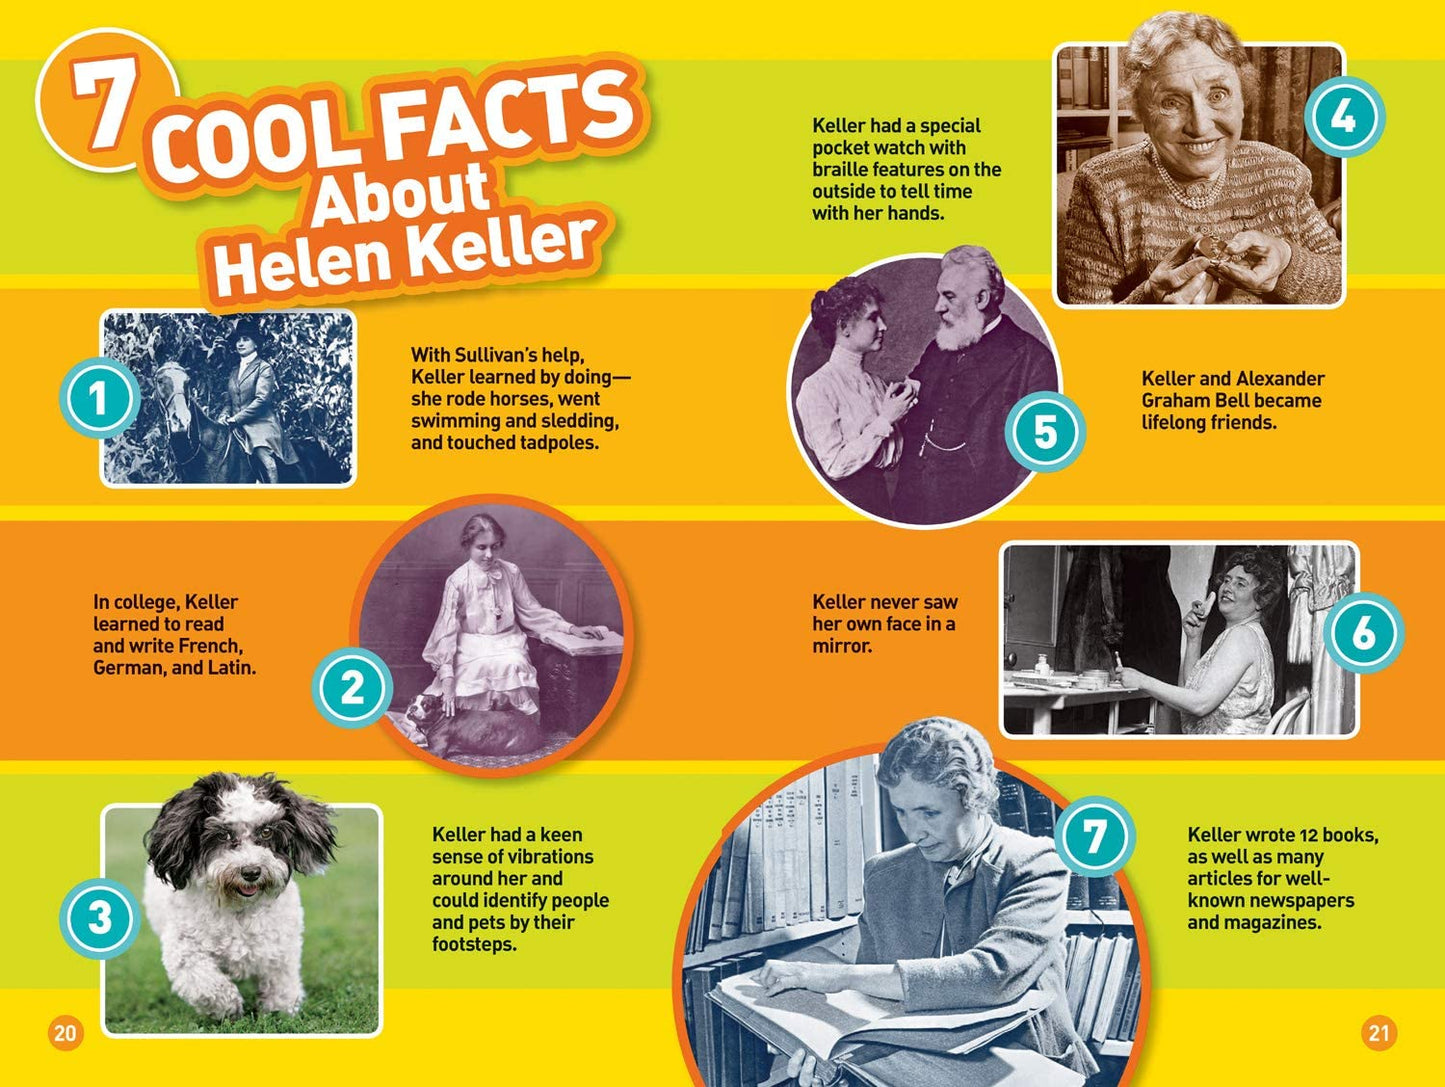 National Geographic Readers: Helen Keller (Level 2)